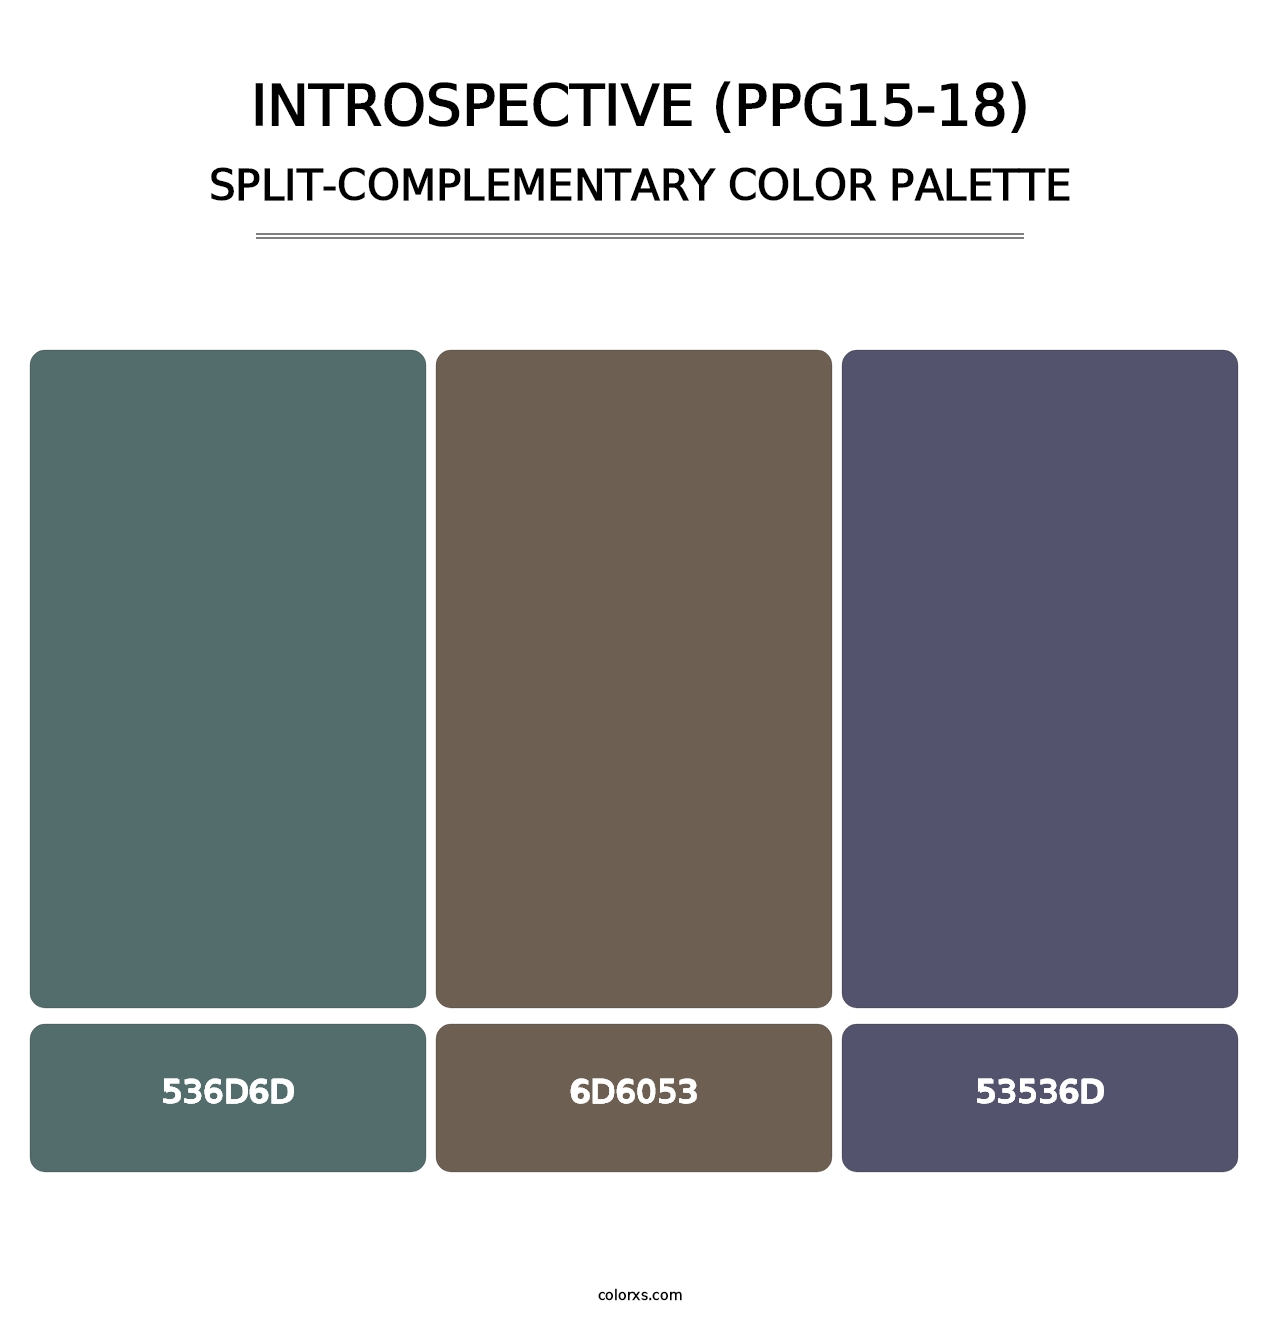 Introspective (PPG15-18) - Split-Complementary Color Palette